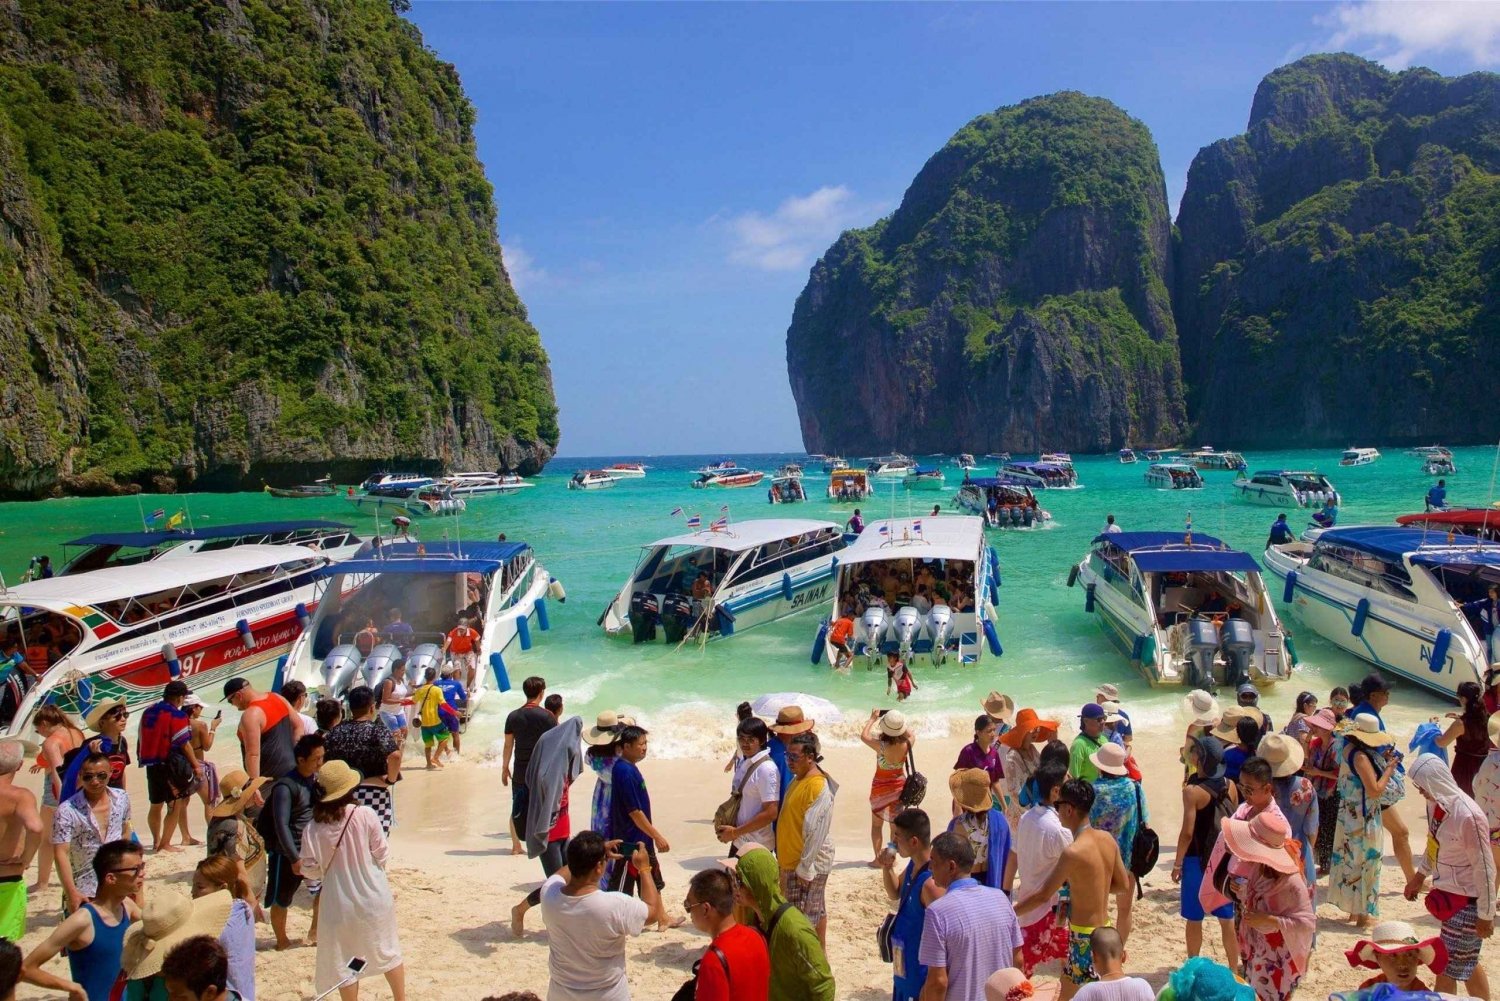 Phuketista: Phi Phi Islands Speedboat Tour